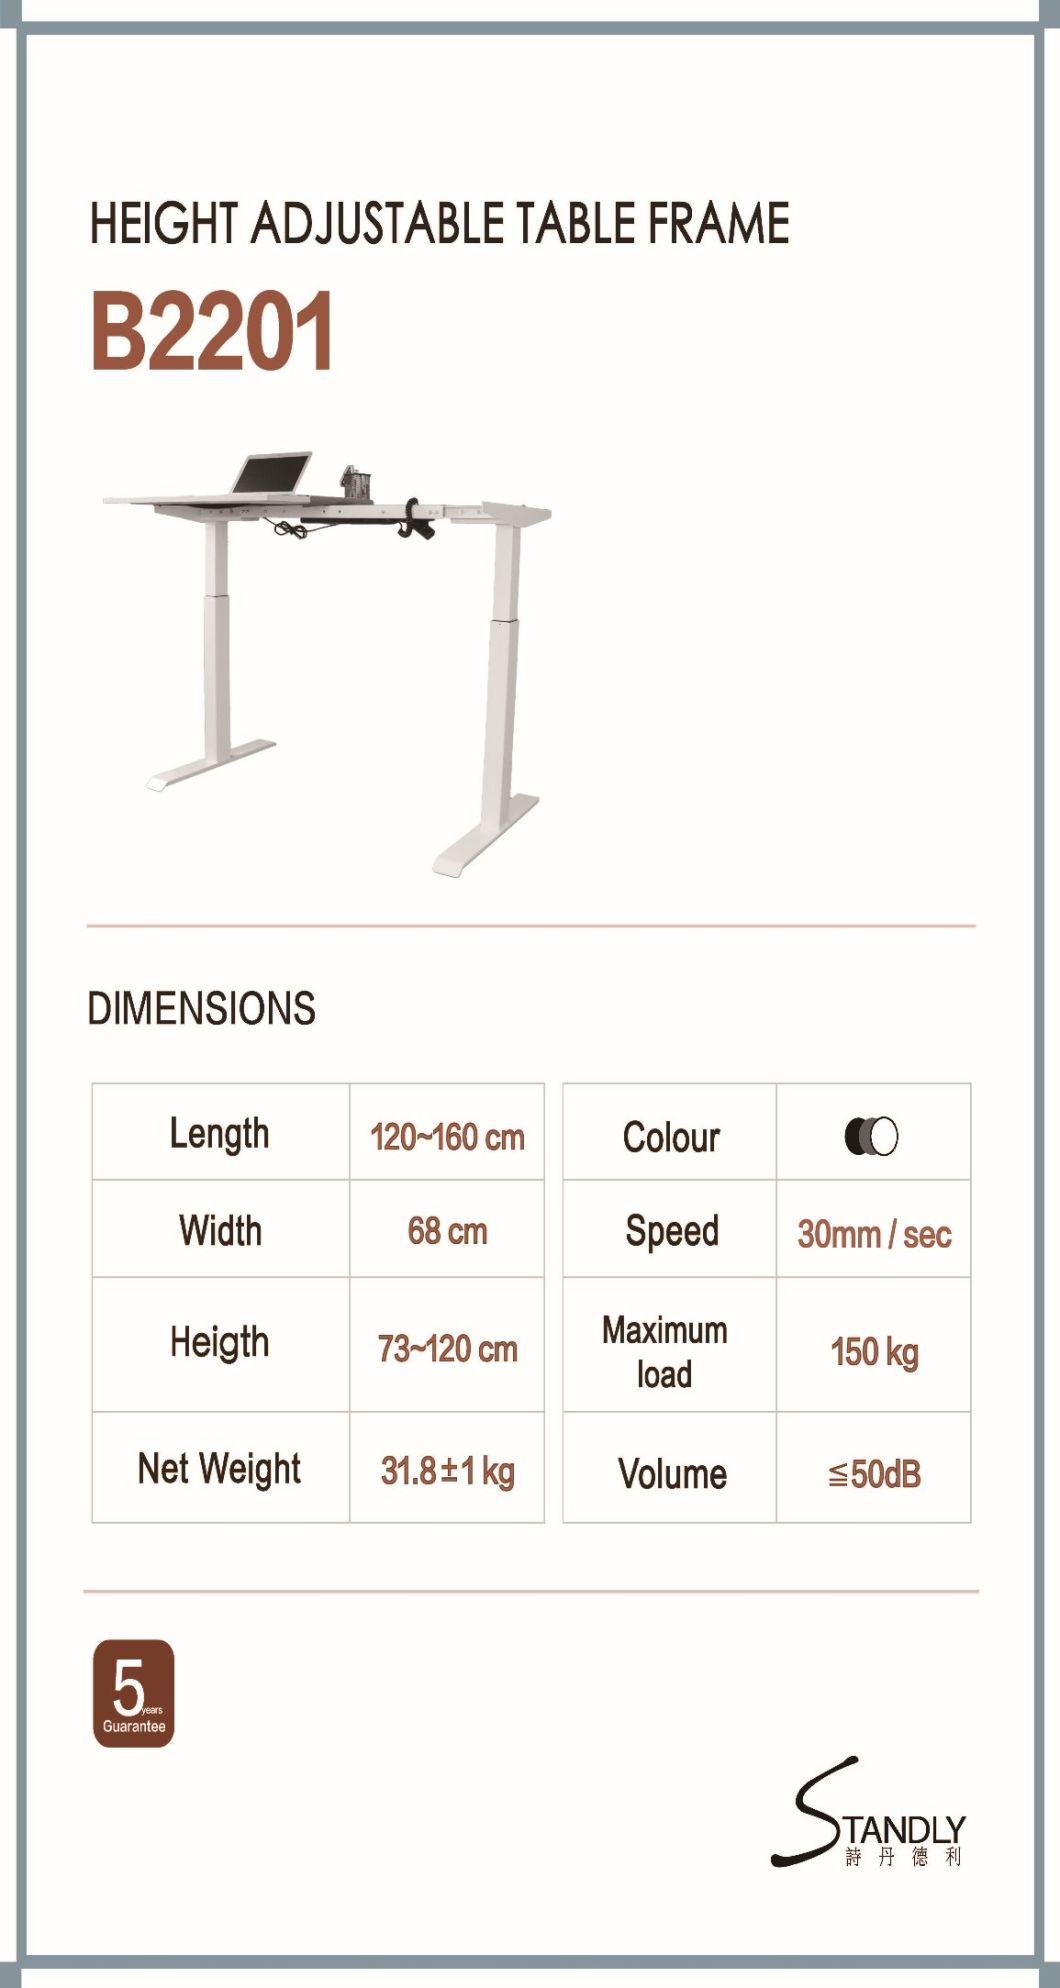 Smart Electric Lift Table Standing Computer Desk Home Desk Office Desk Mobile Desk Bedroom Learning Desk Height Adjustable Table with Single Motor